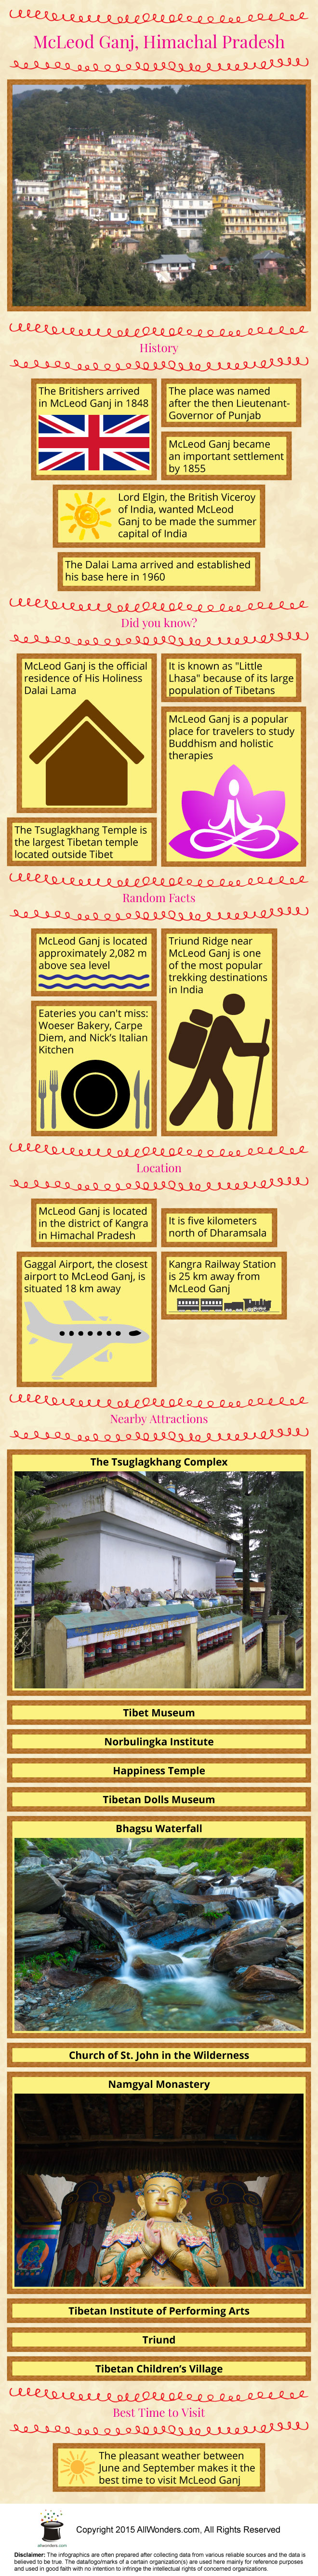 McLeod Ganj Infographic